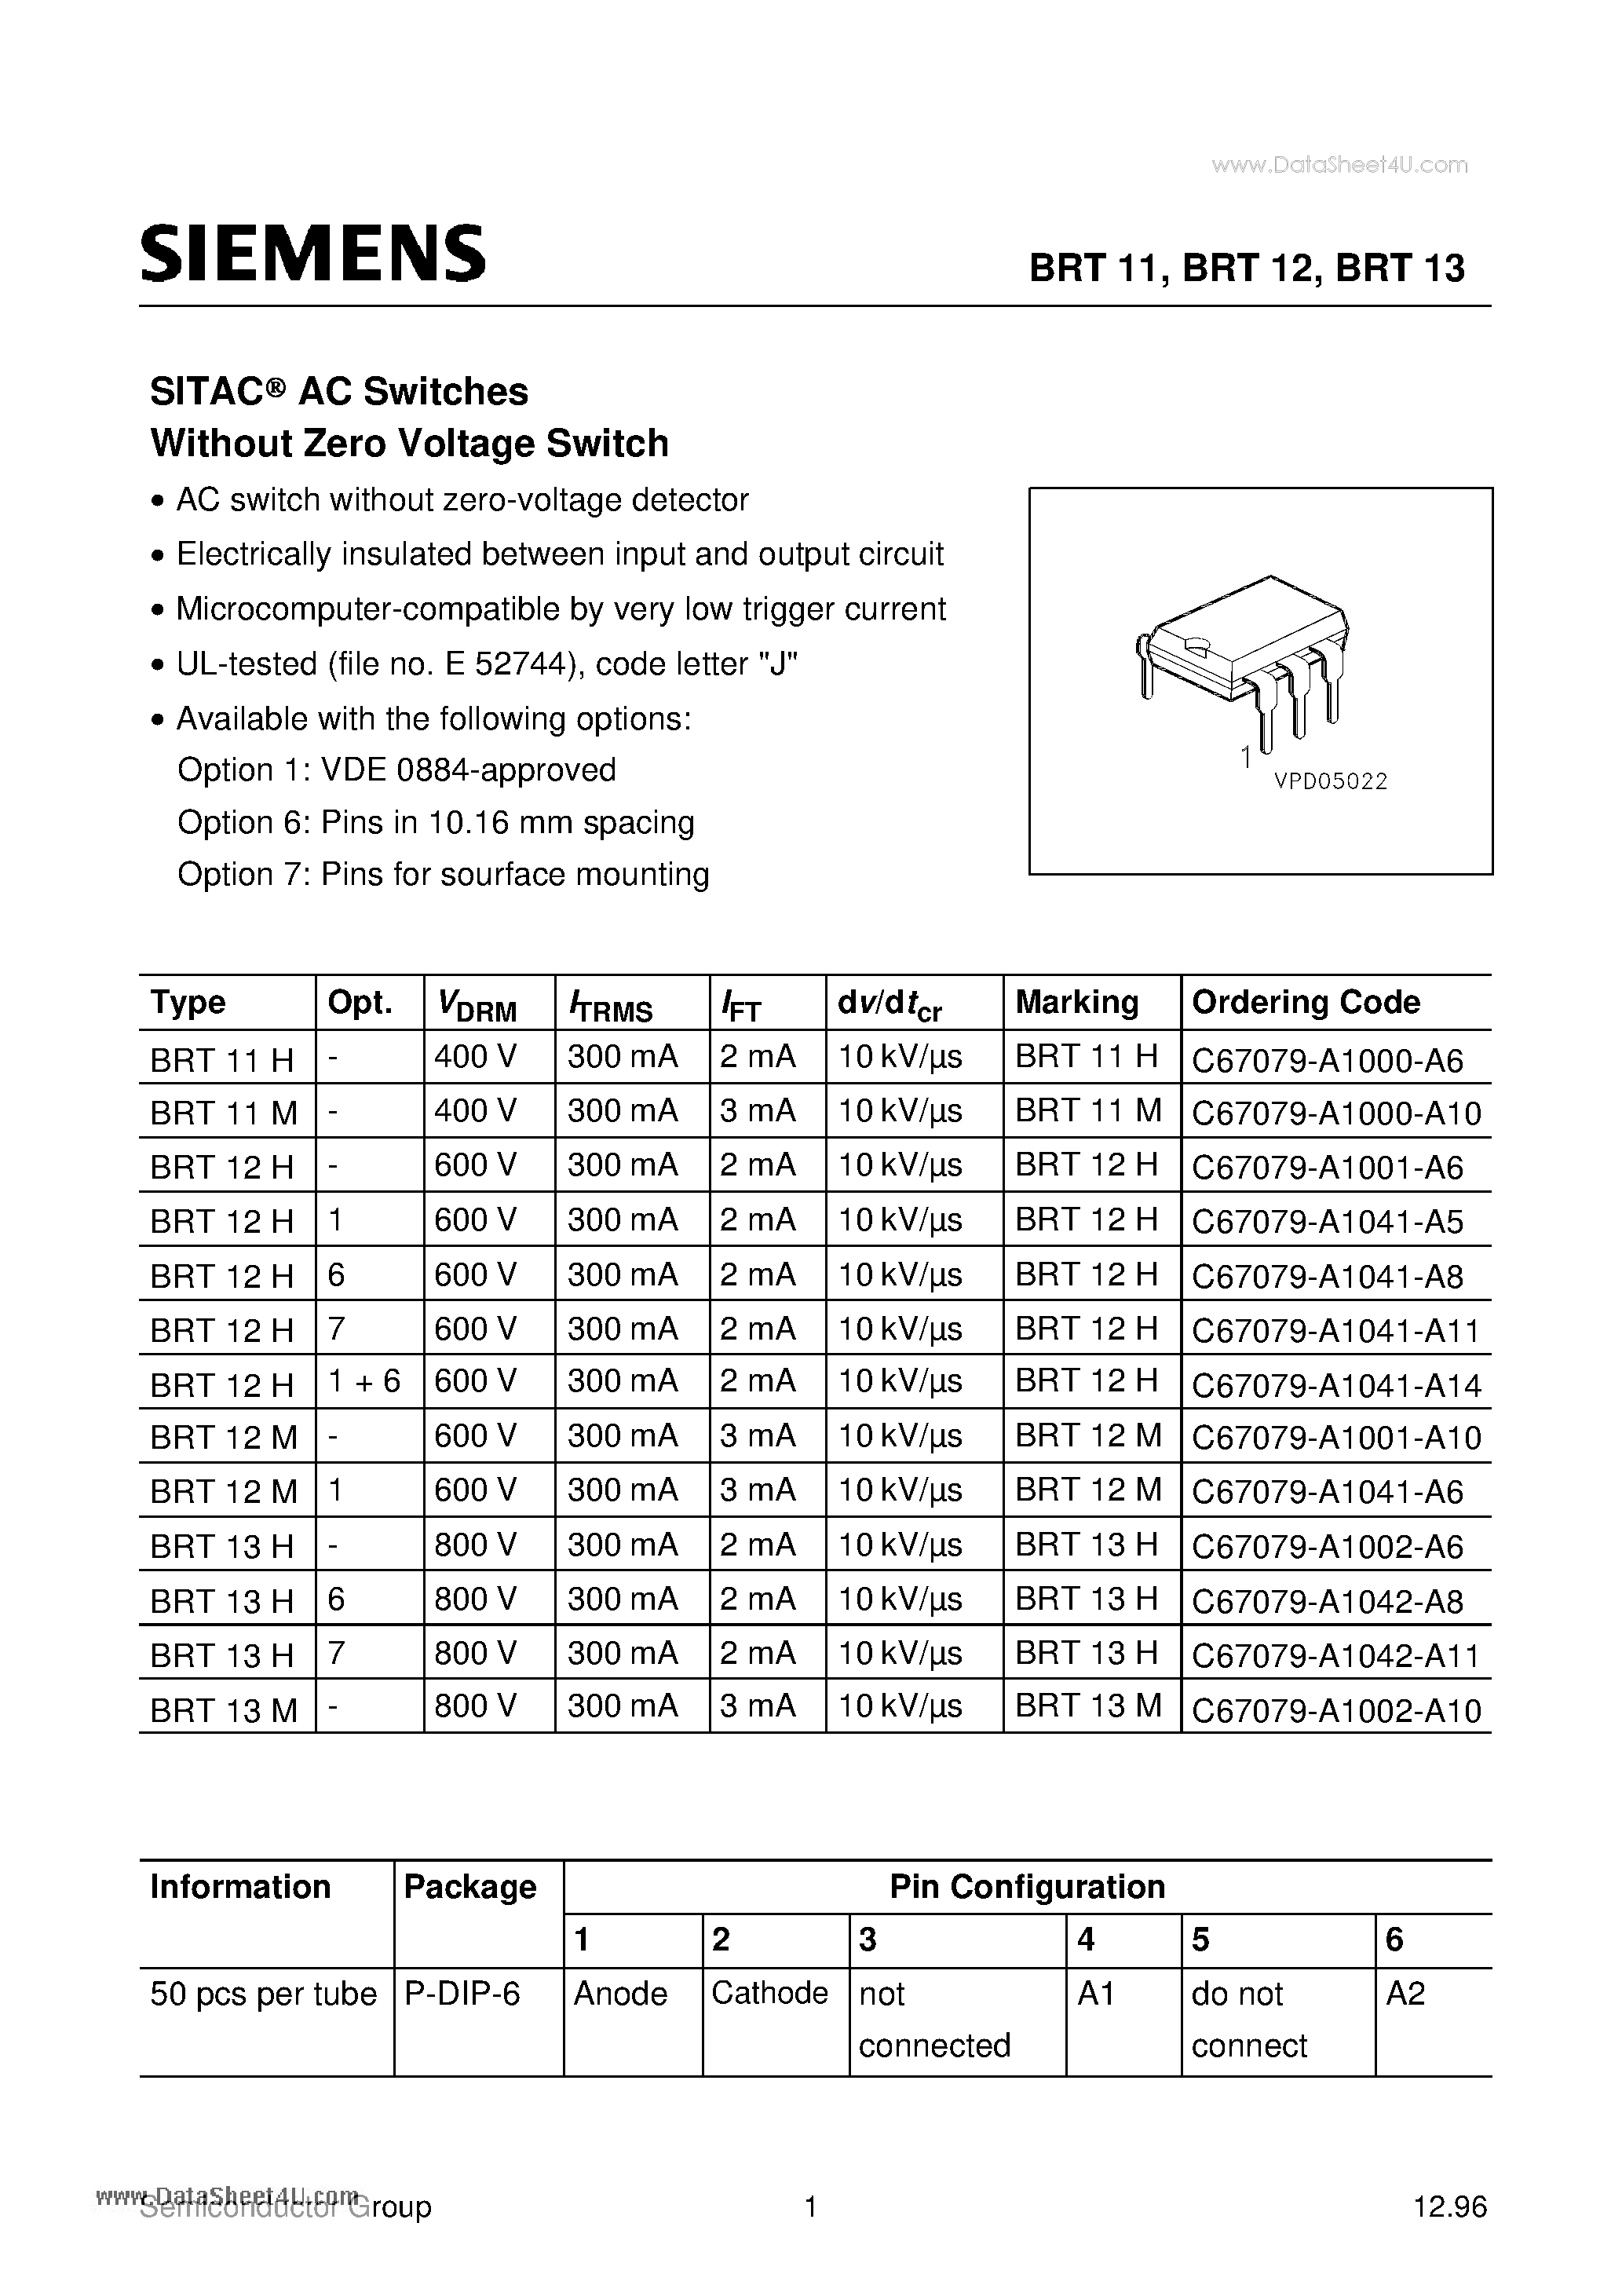 Даташит BRT11H - SITACO AC Switches Without Zero Voltage Switch страница 1